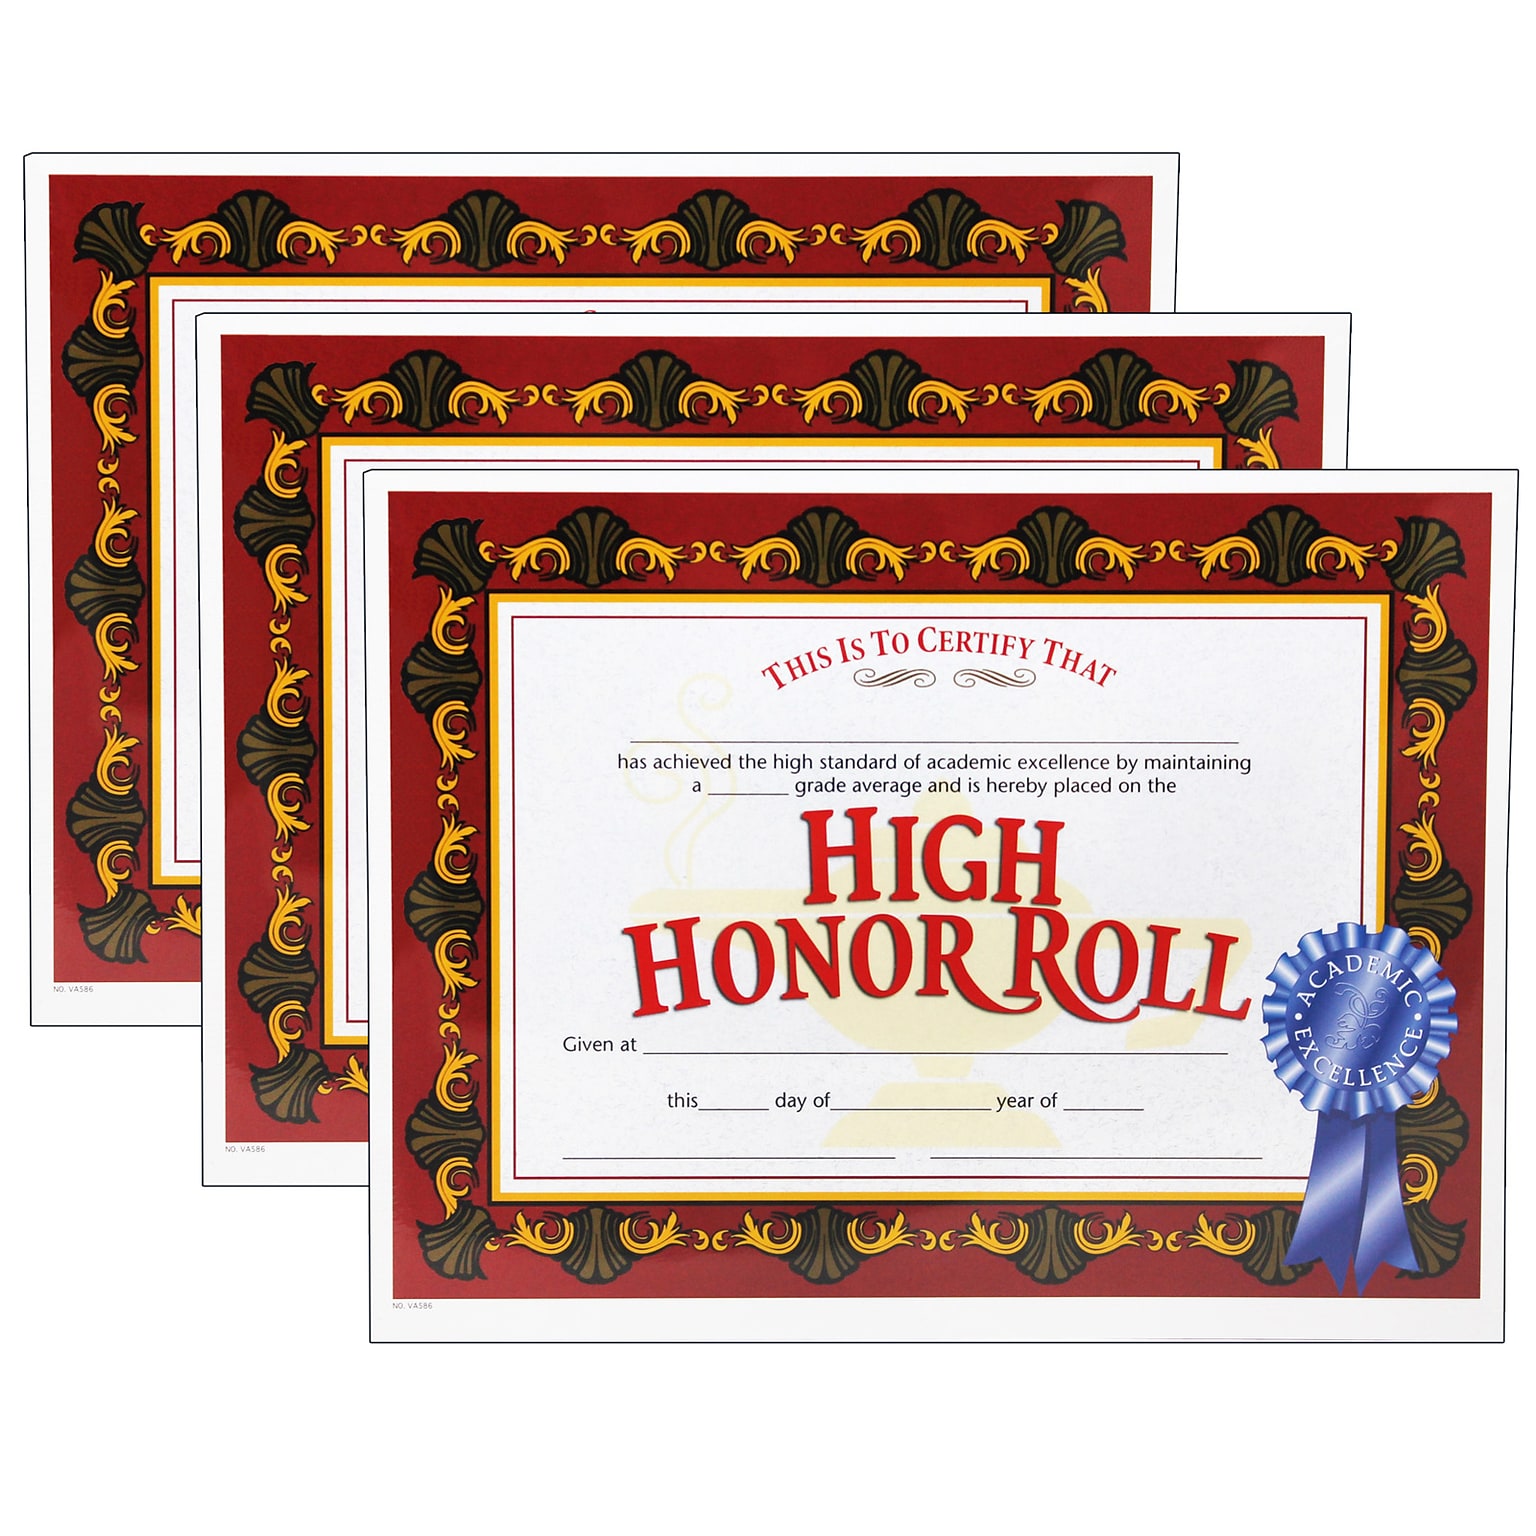 Hayes Publishing High Honor Roll Certificate, 30/Pack, 3 Packs (H-VA586-3)